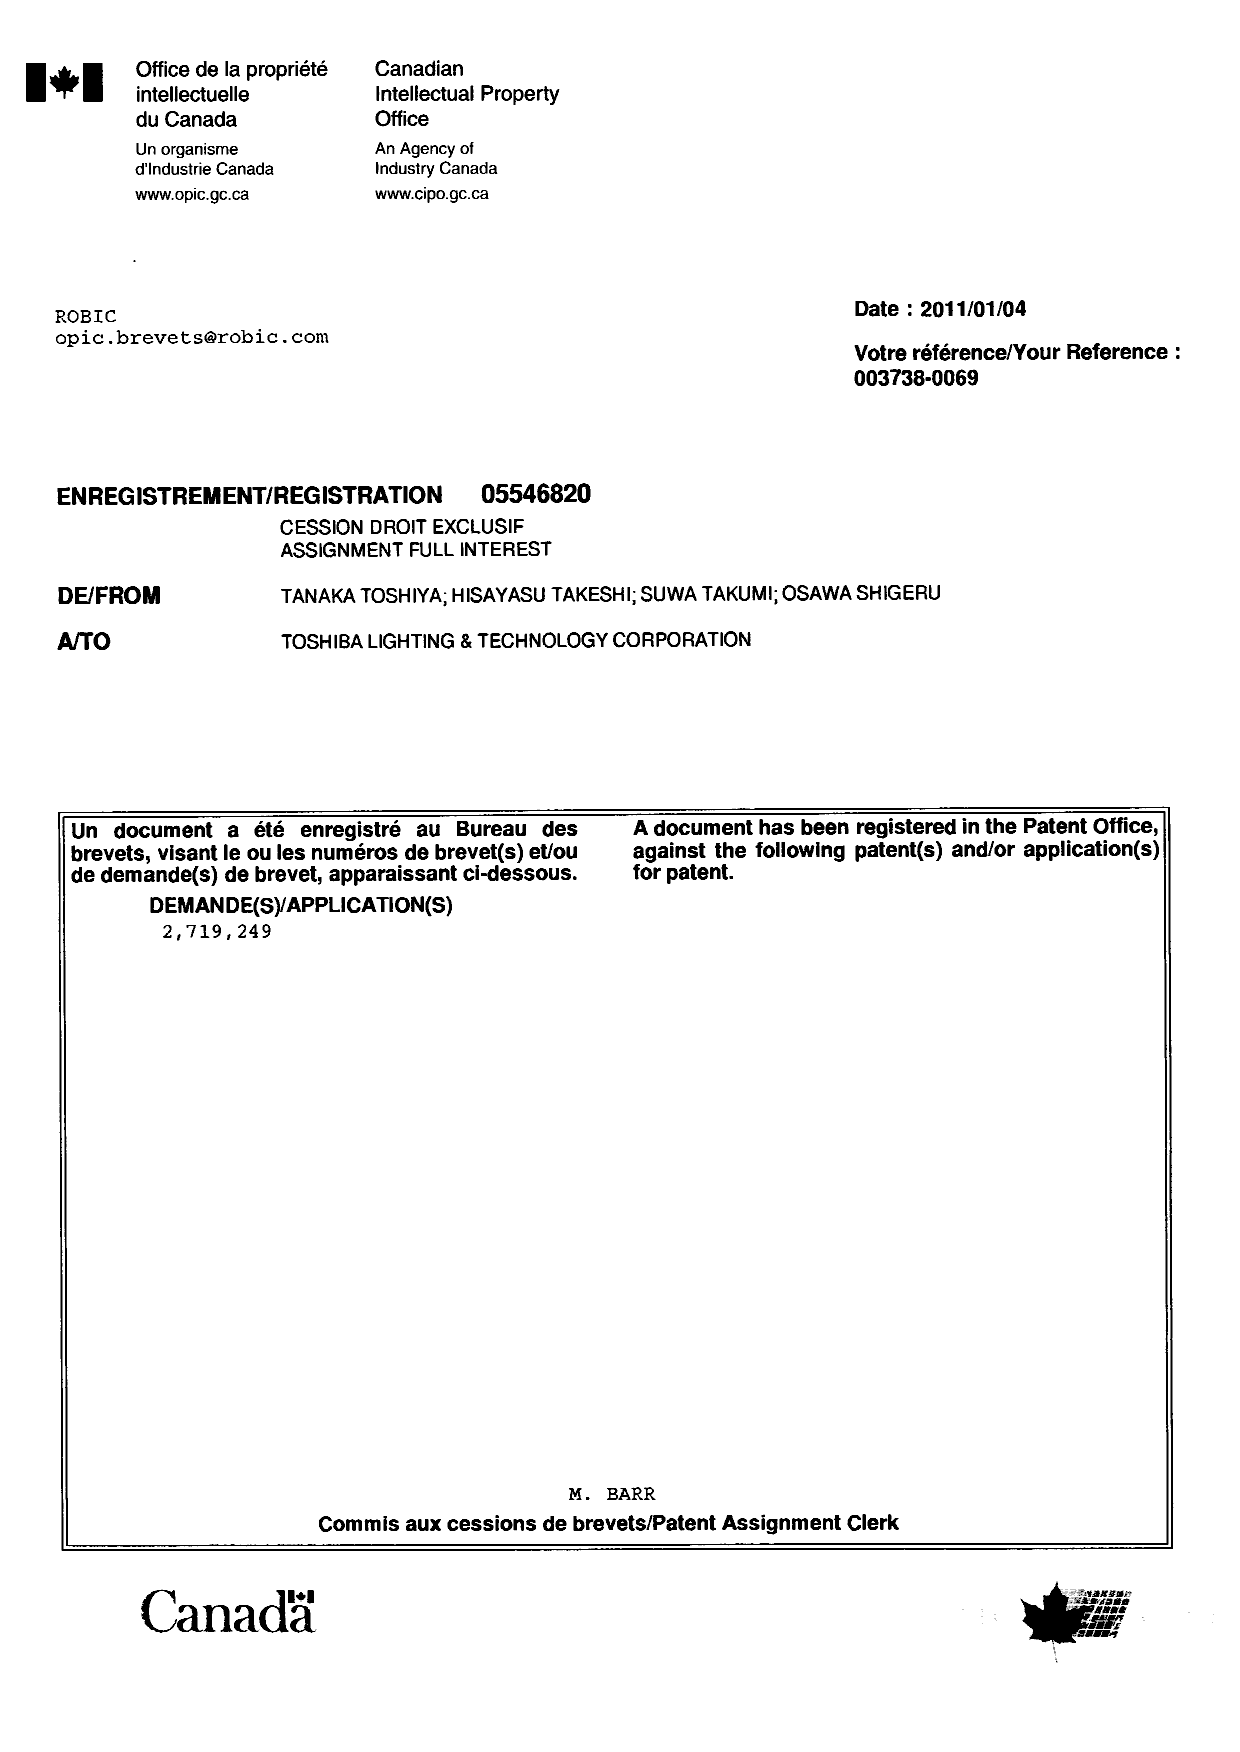 Canadian Patent Document 2719249. Correspondence 20110104. Image 1 of 1